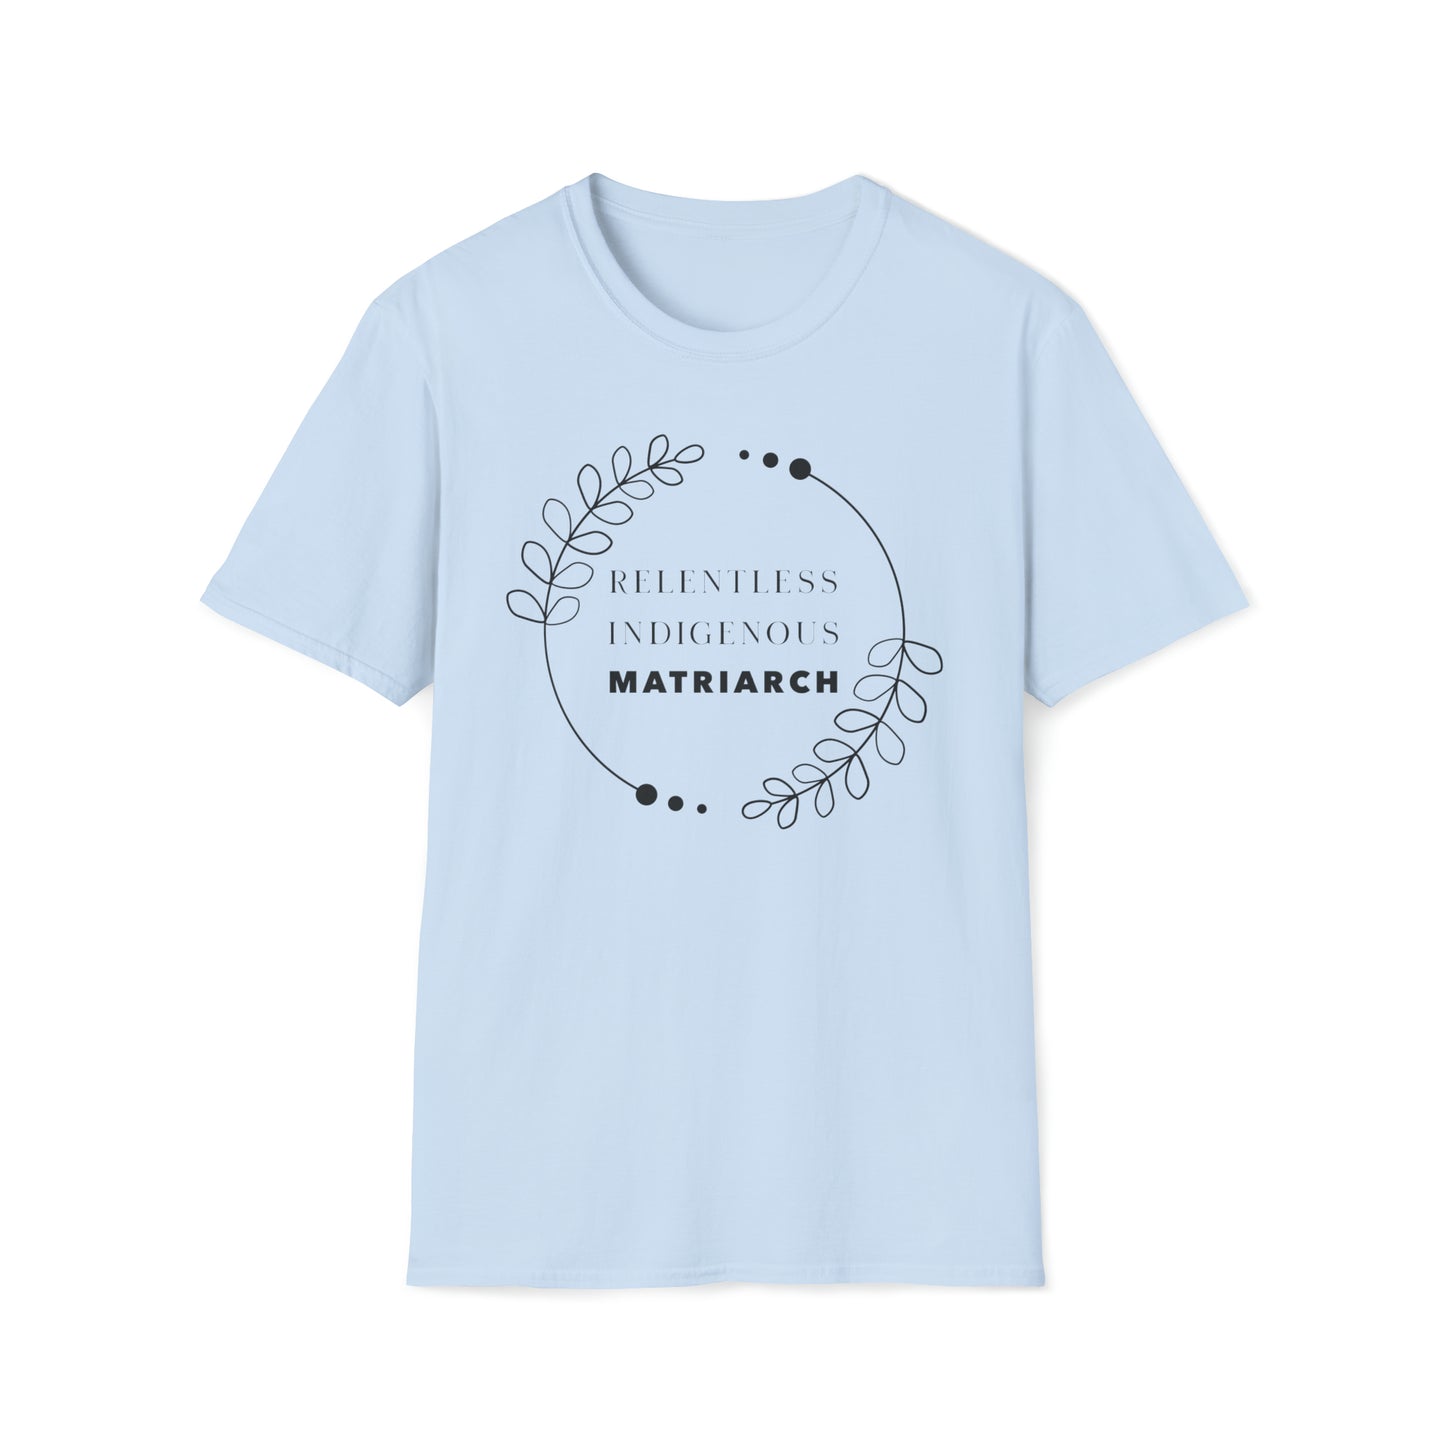 Relentless Indigenous Matriarch // T-Shirt